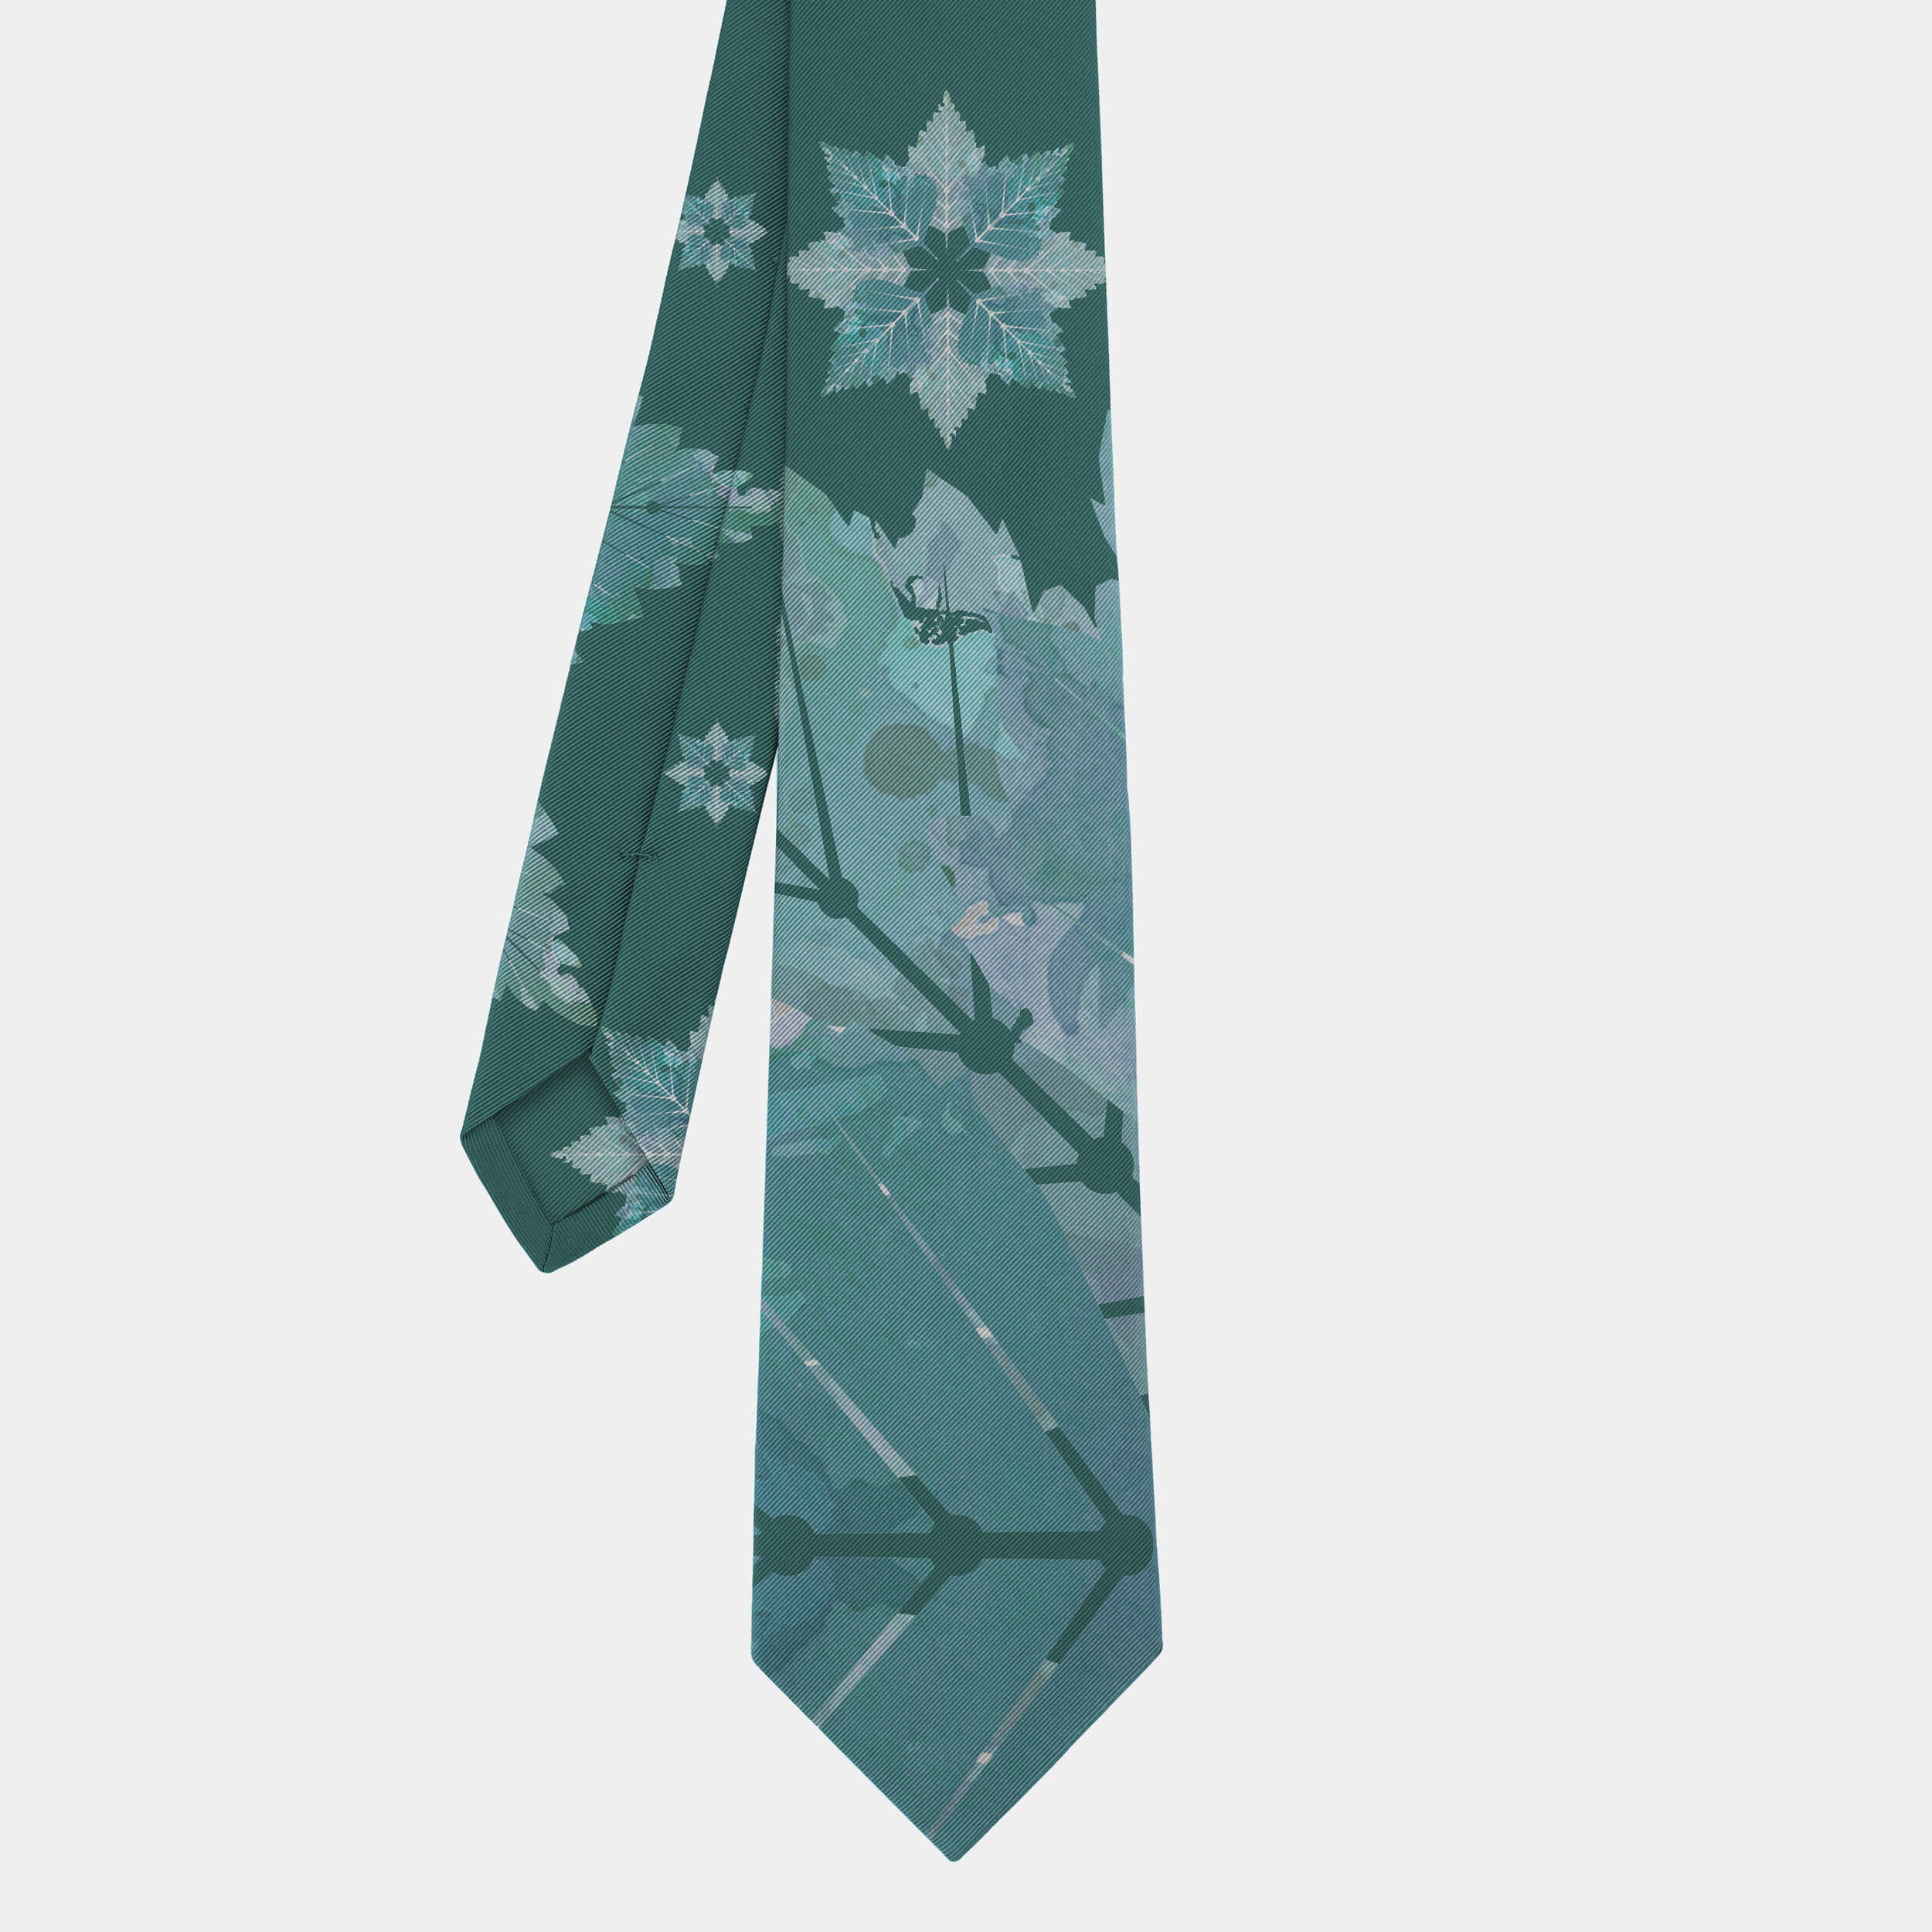 Frosty Birch Tie.jpg